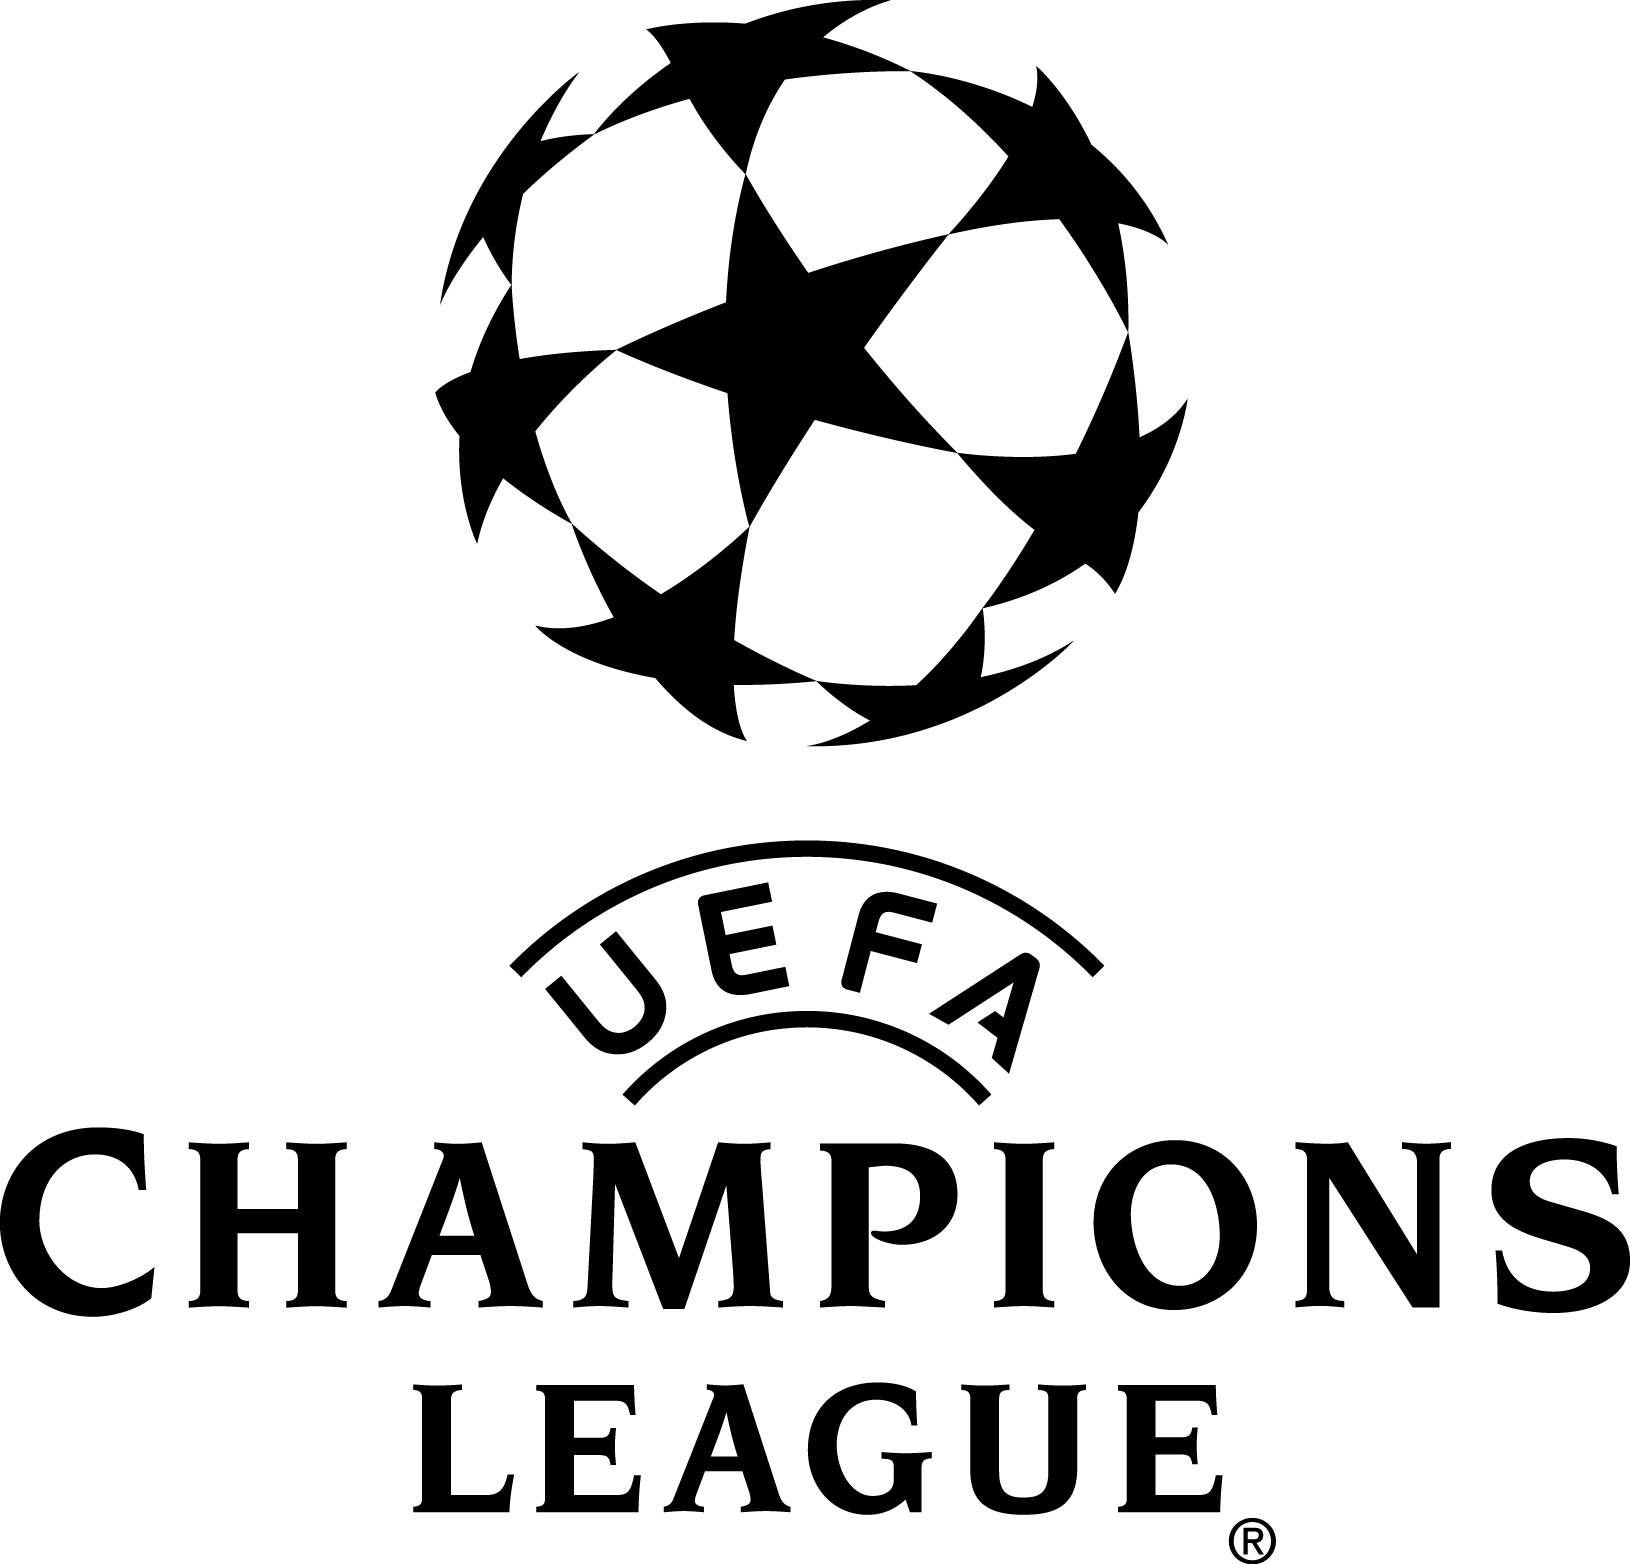 Uefa Vector Logos PNG-PlusPNG